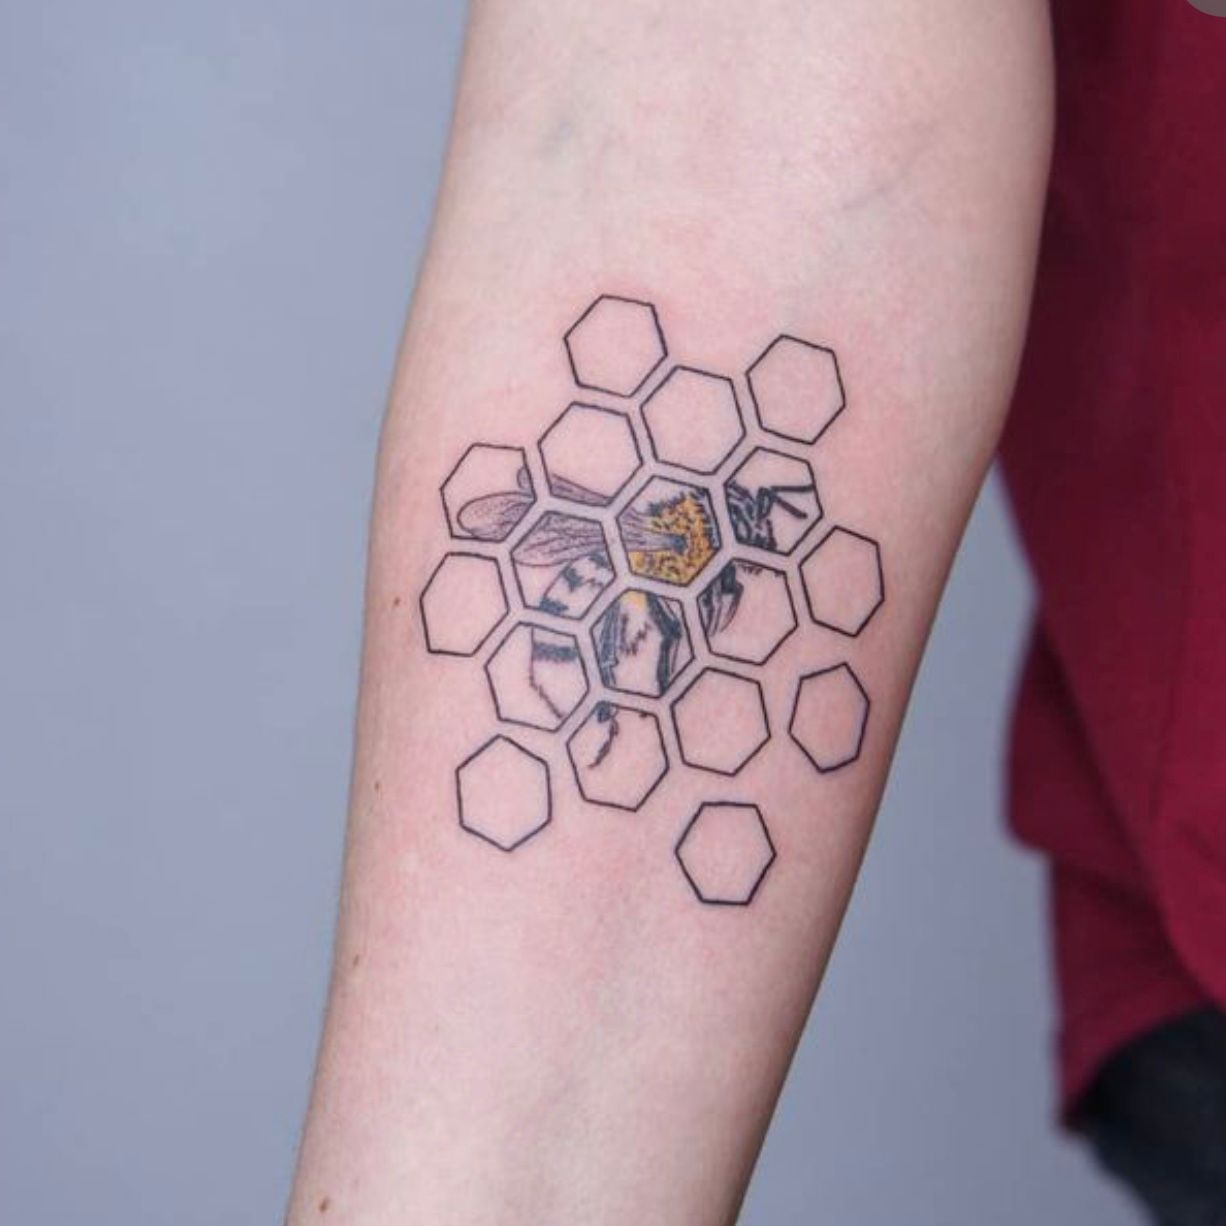 Tattoo uploaded by Frank Walch • hexagon • Tattoodo